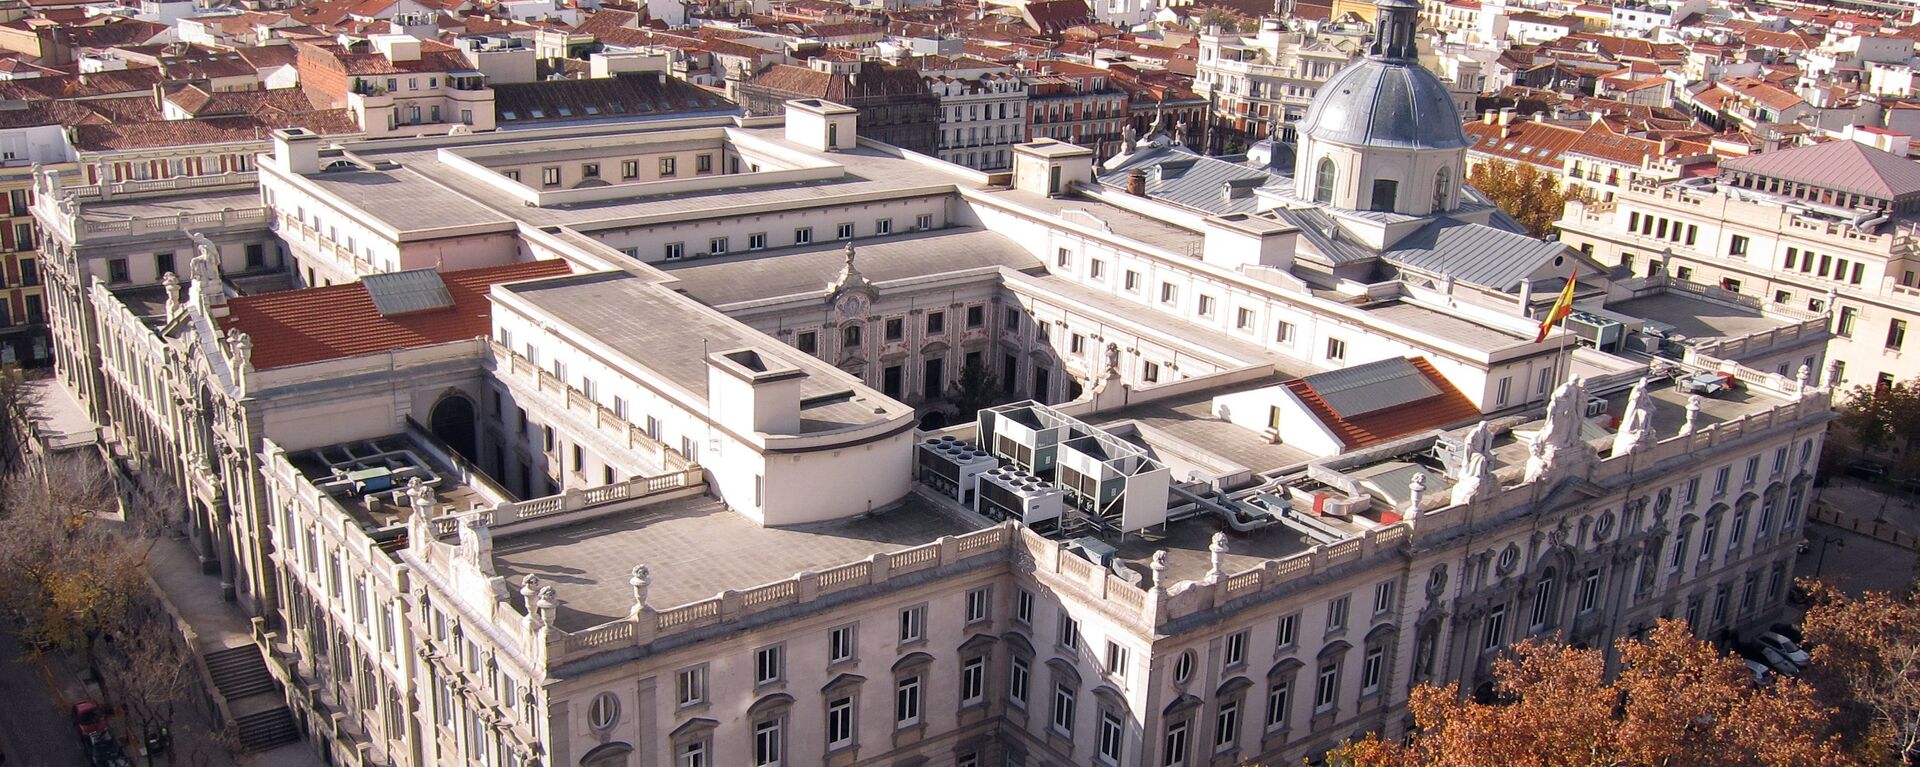 Tribunal Supremo de España en Madrid (vista aérea) - Sputnik Mundo, 1920, 22.10.2021